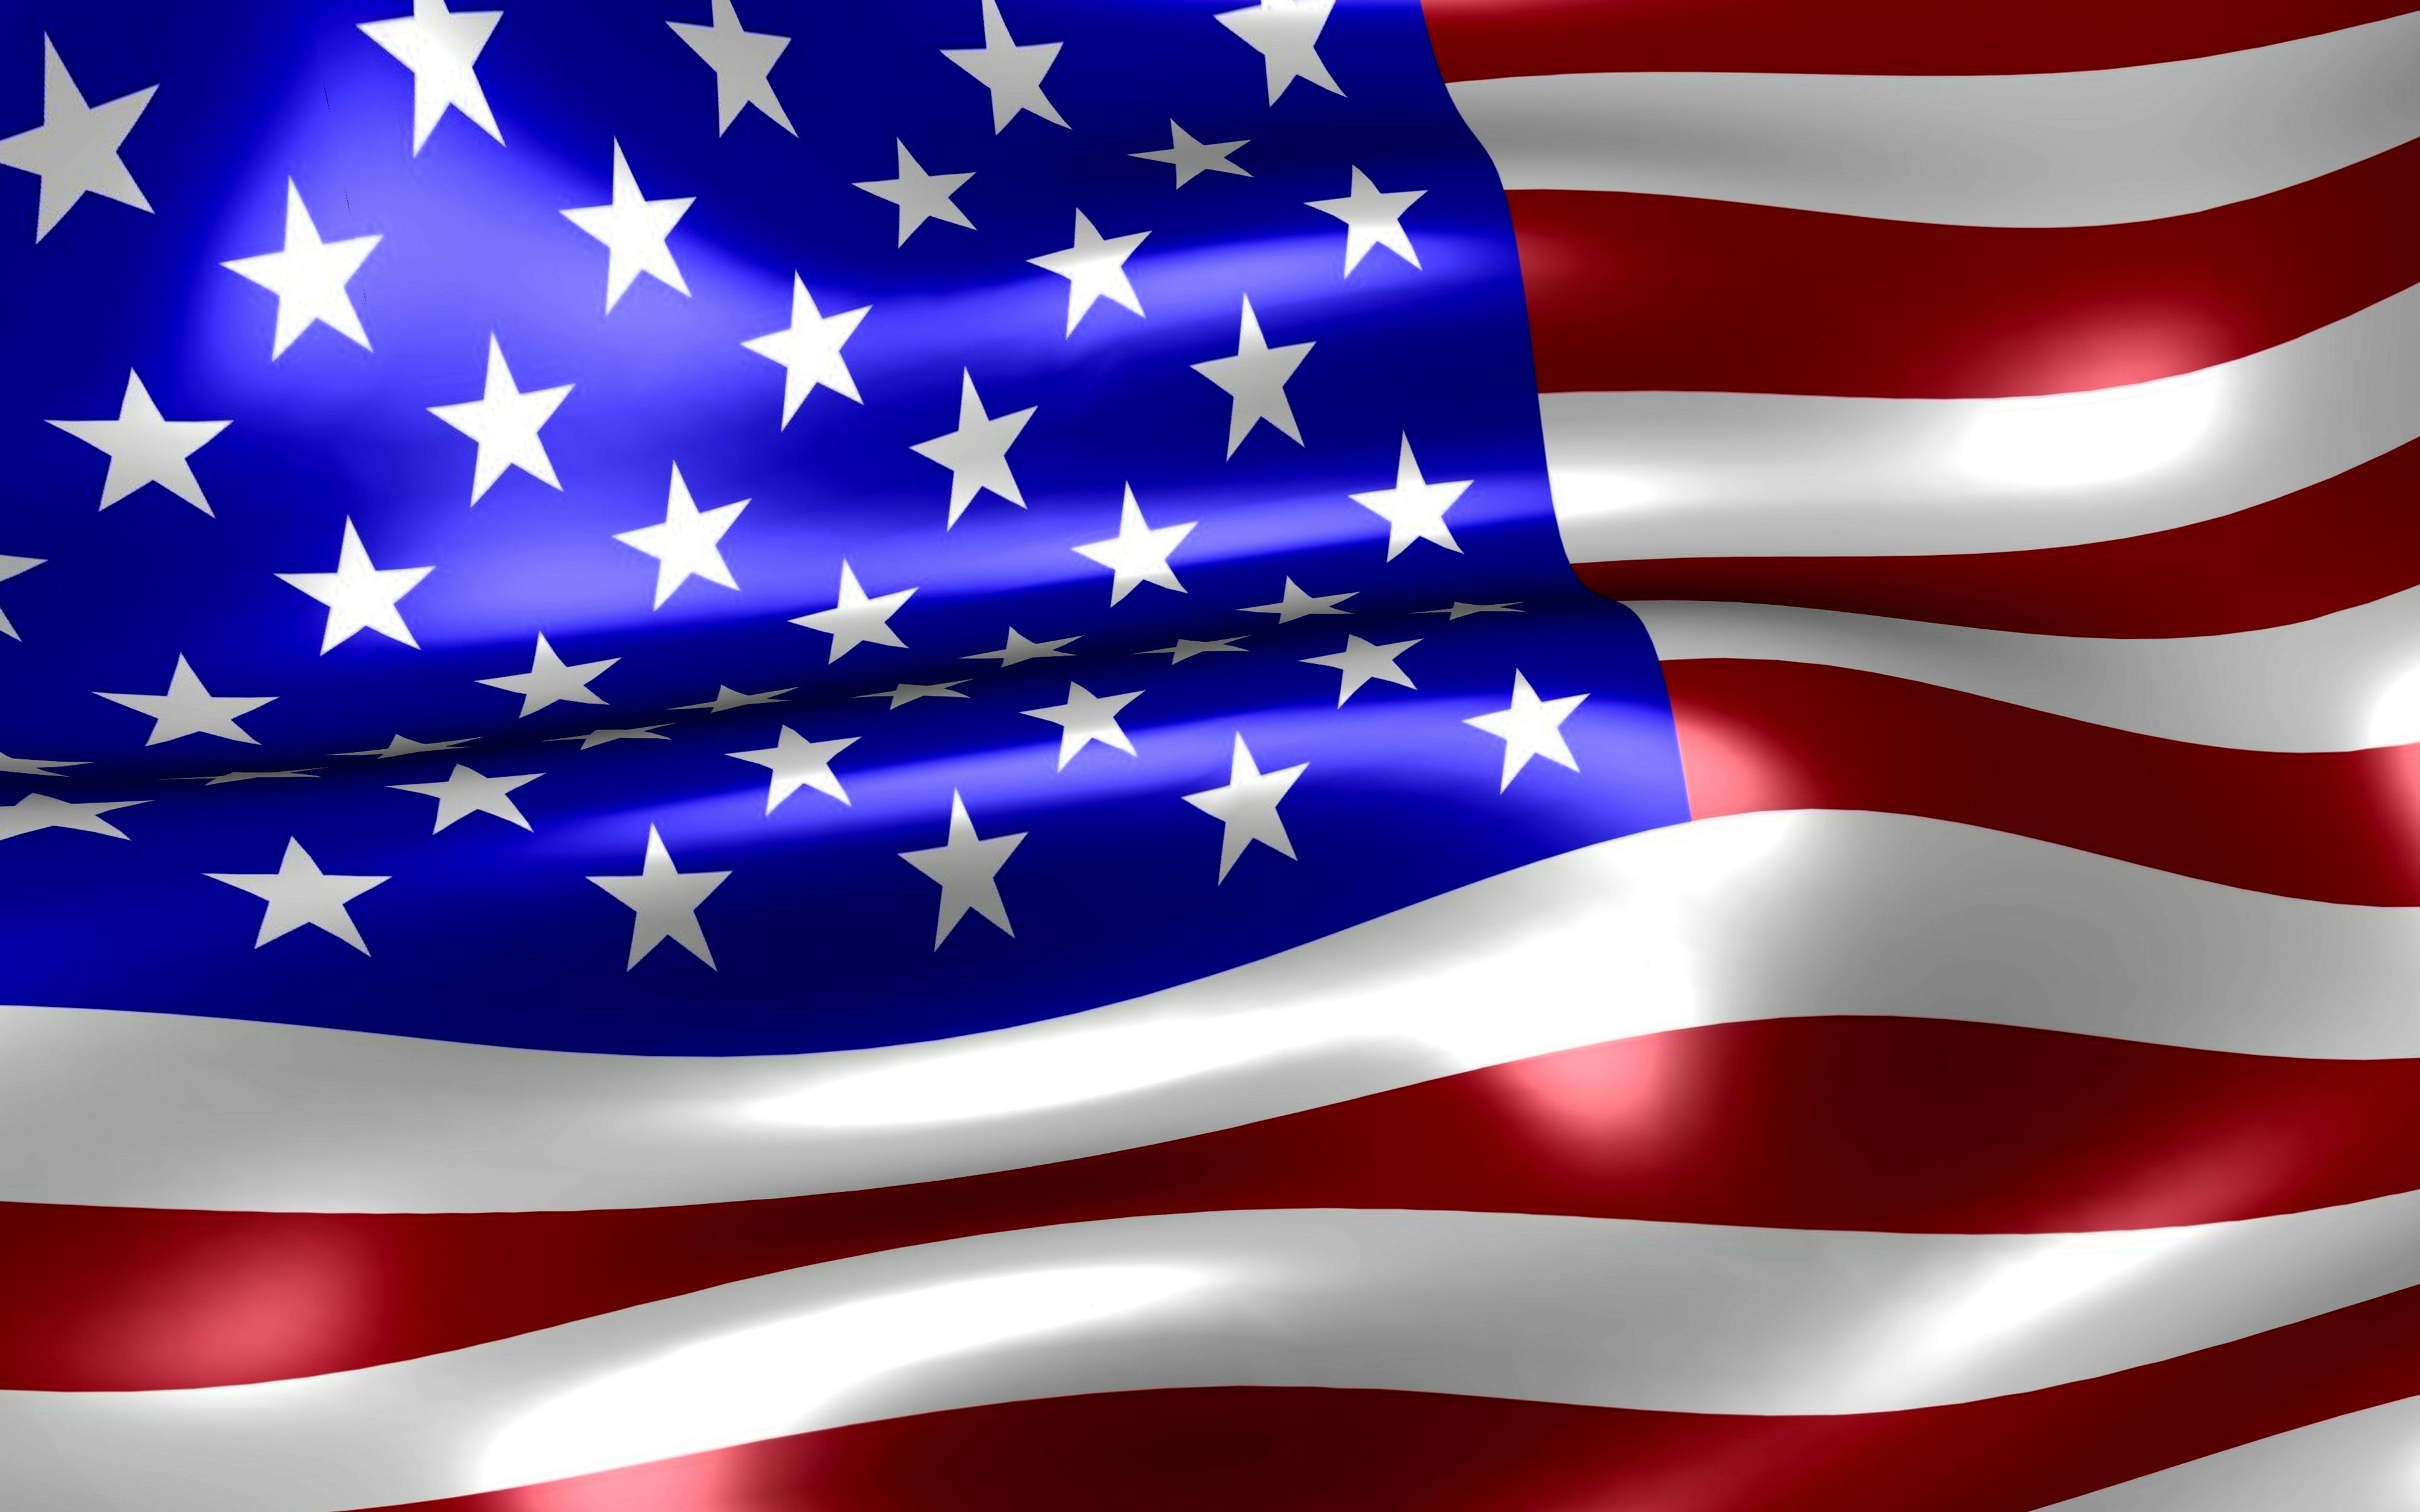 Download wallpaper 3D US Flag, USA flag, American 3D flag, US